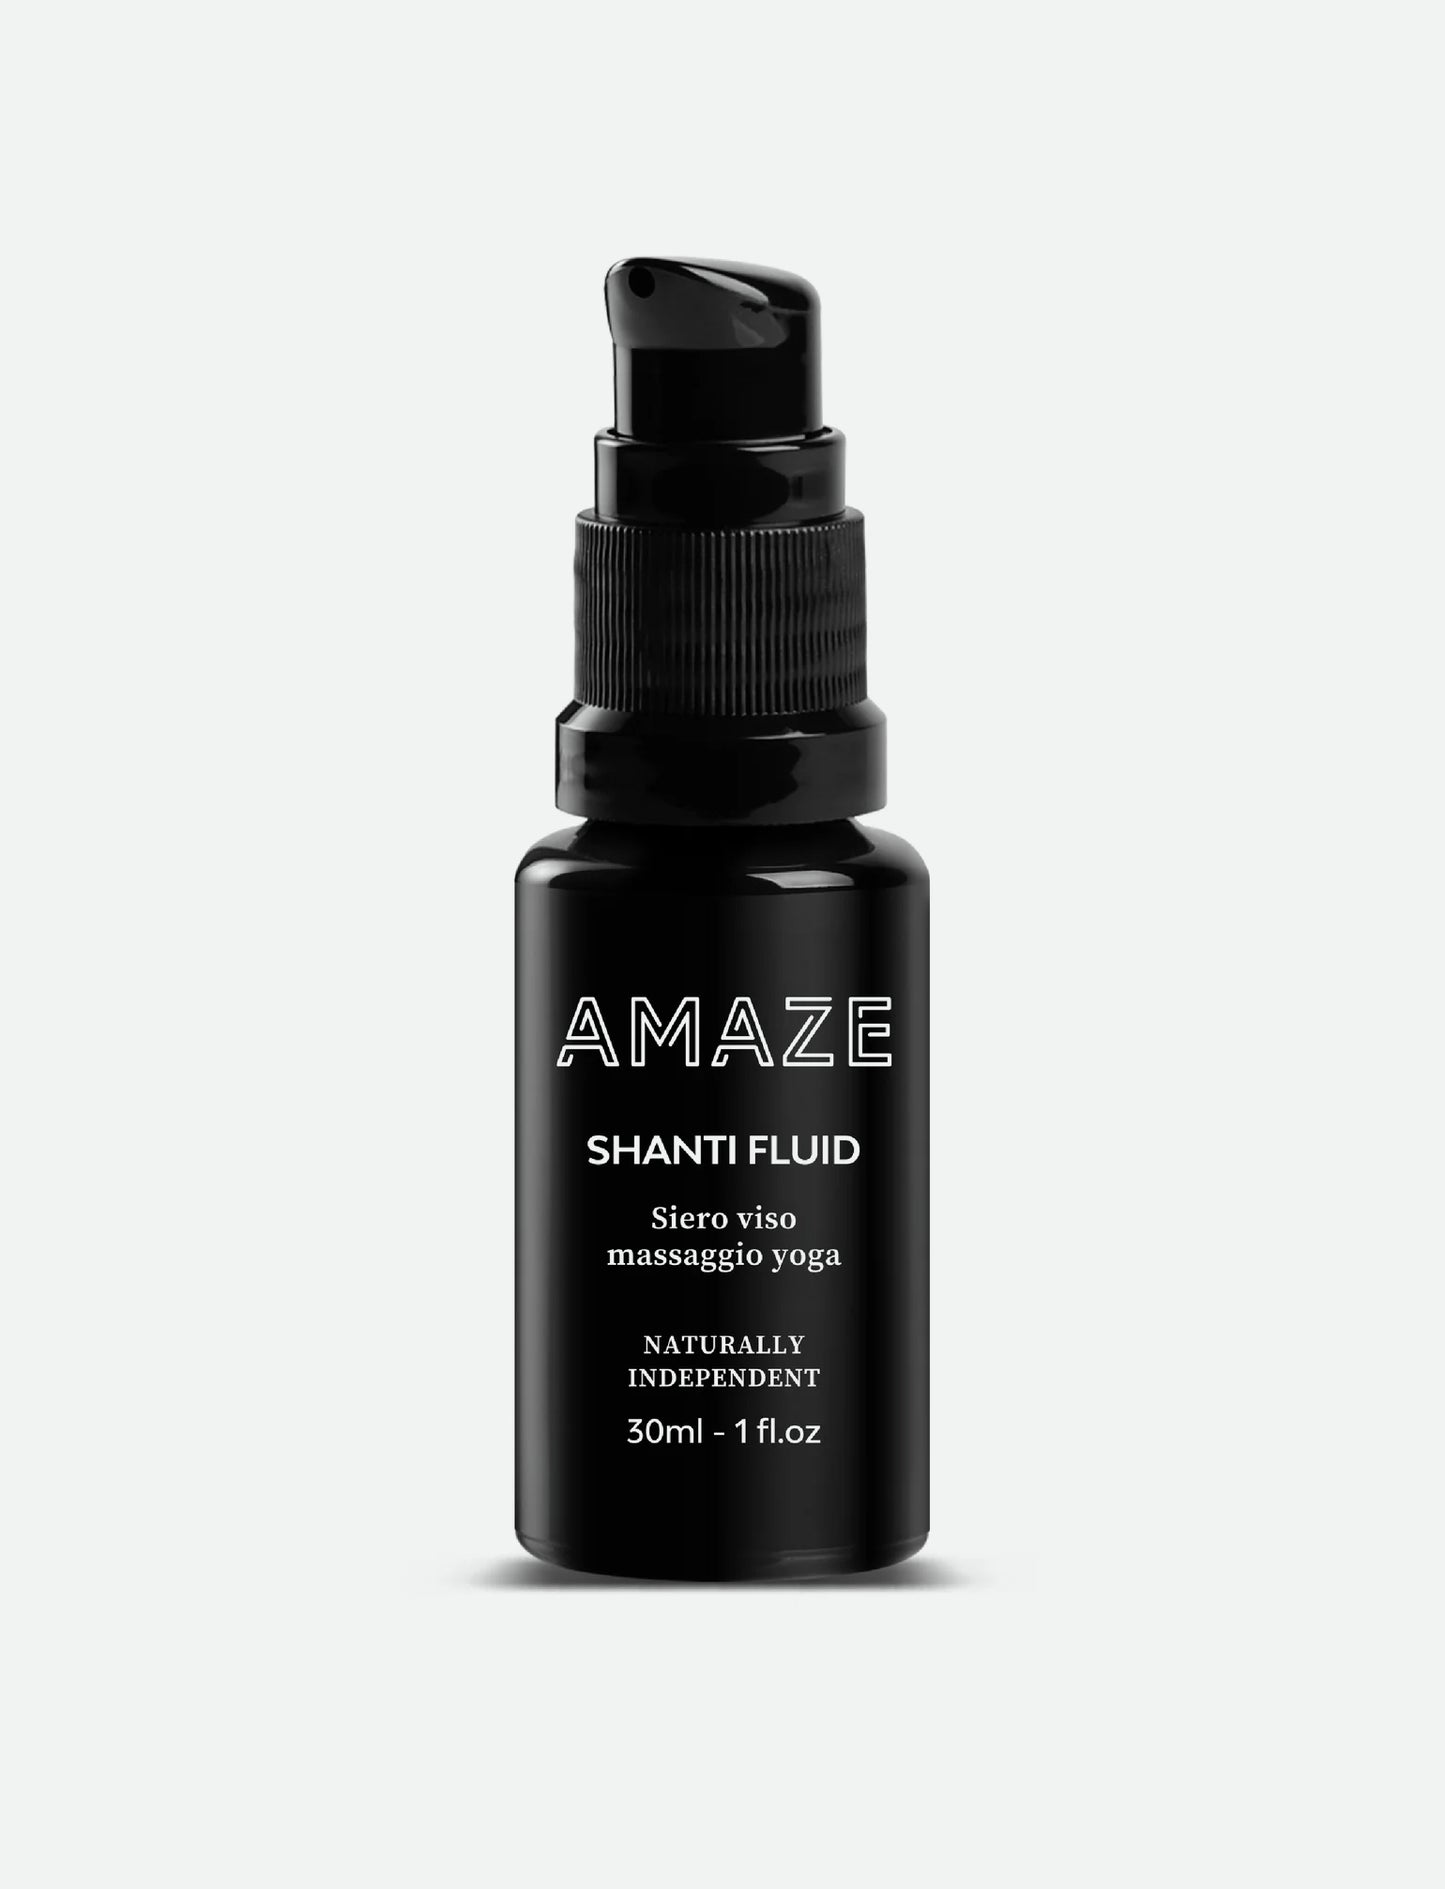 Amaze Shanti Fluid Serum Yoga Facial Massage